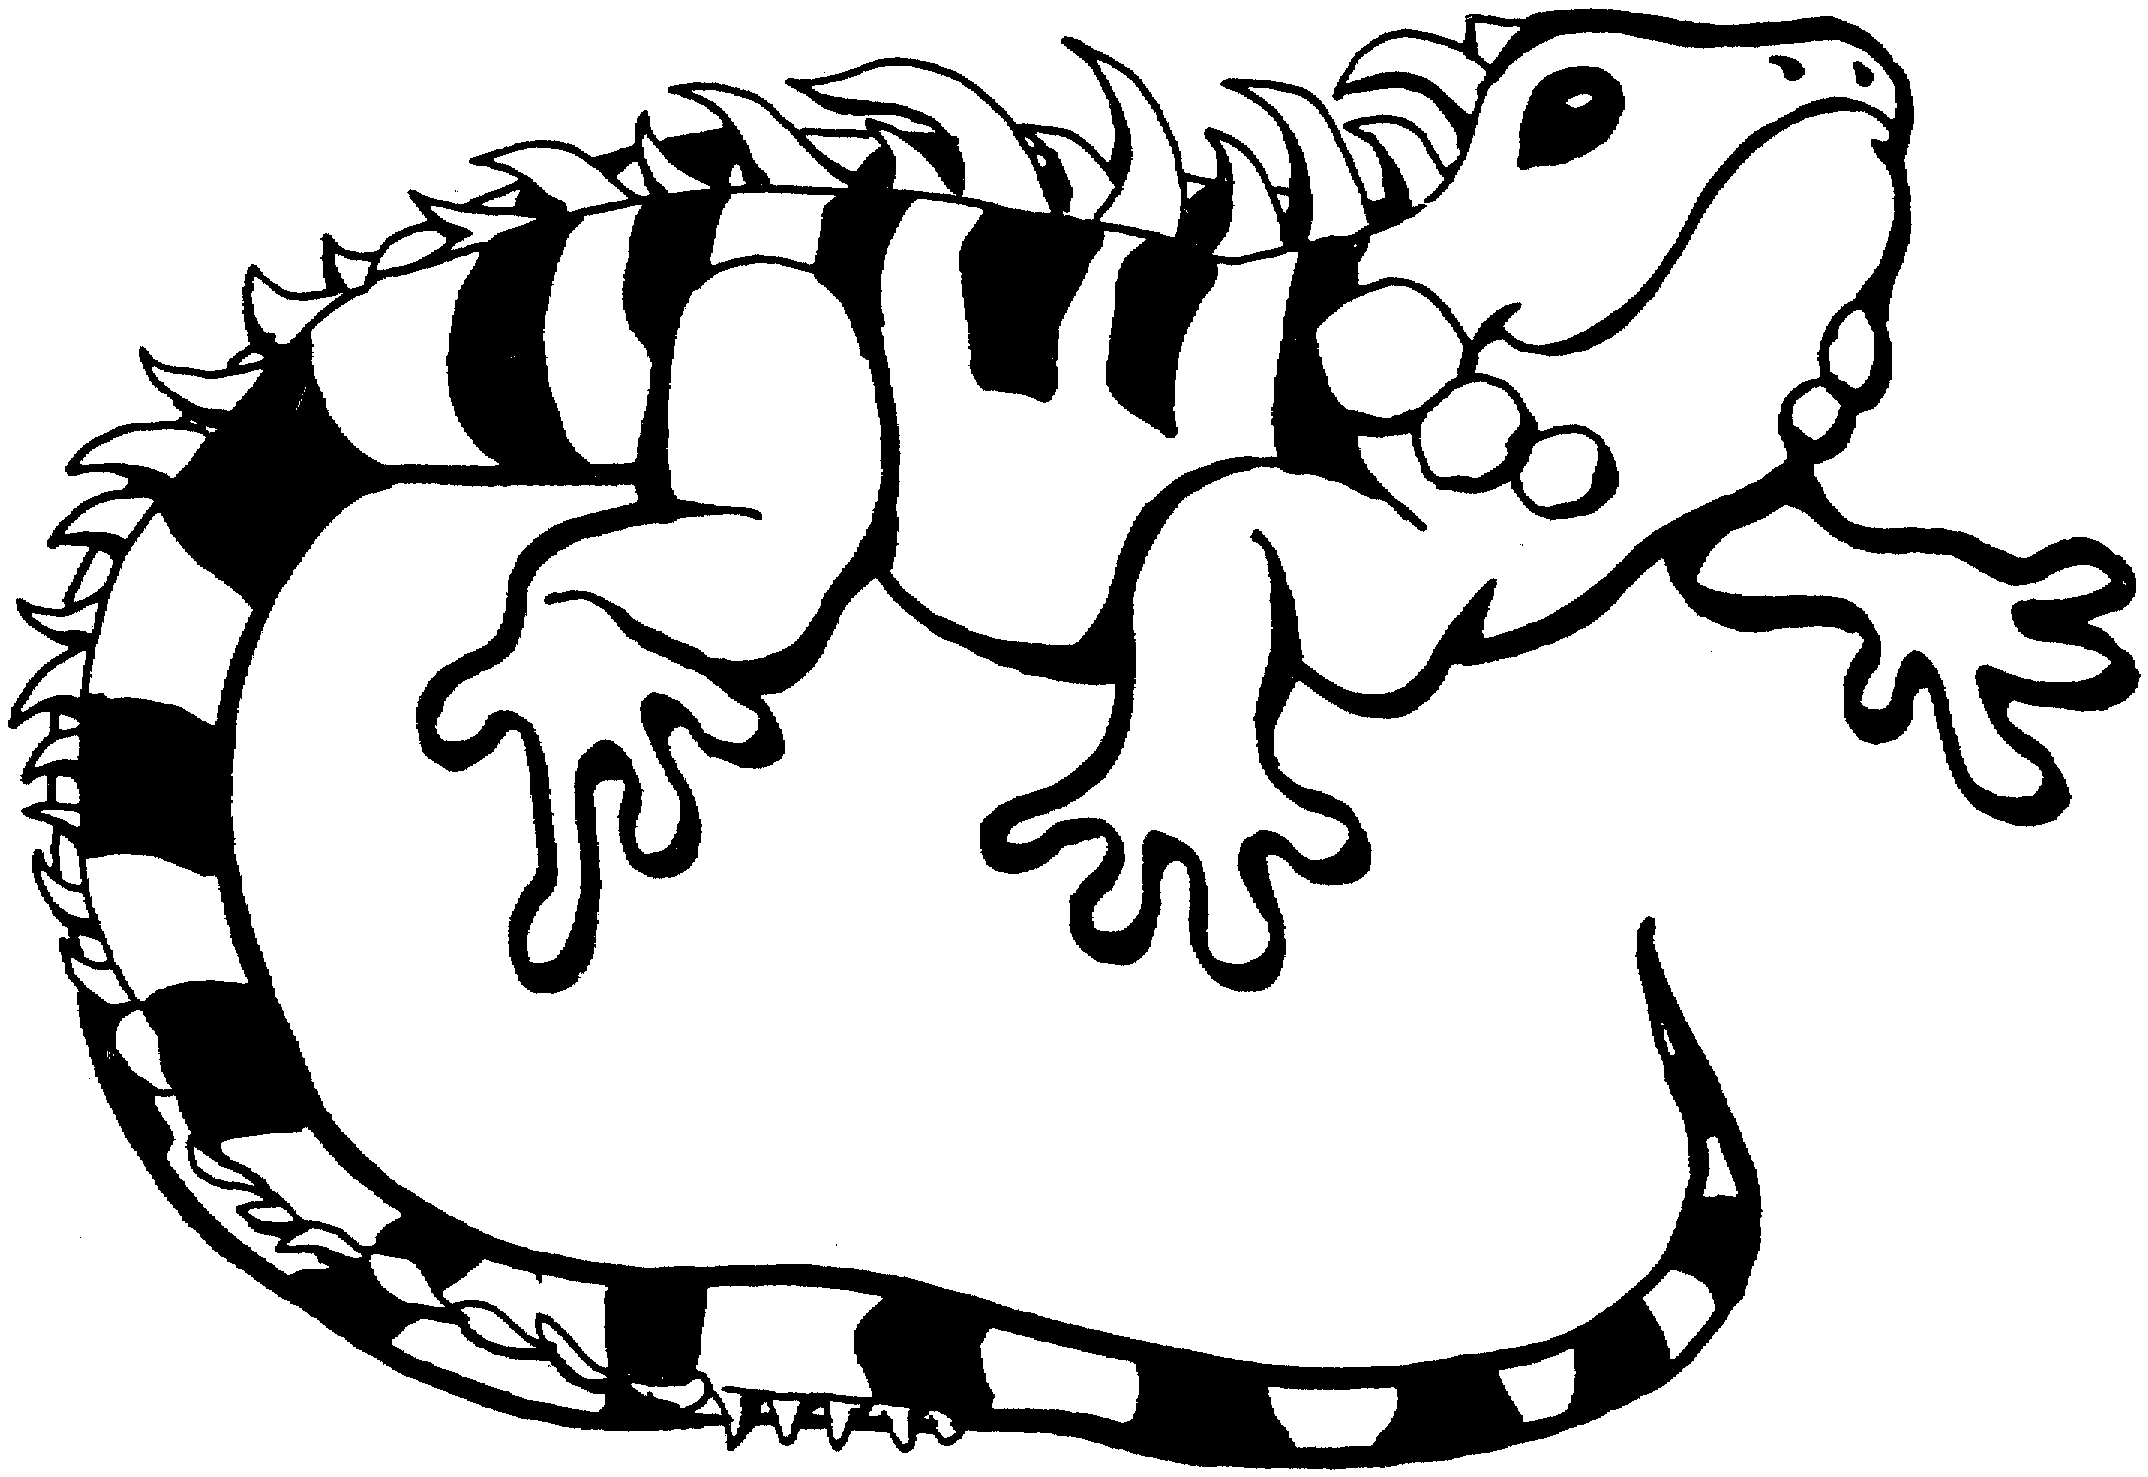 57 Iguana Animal Coloring Pages  Free